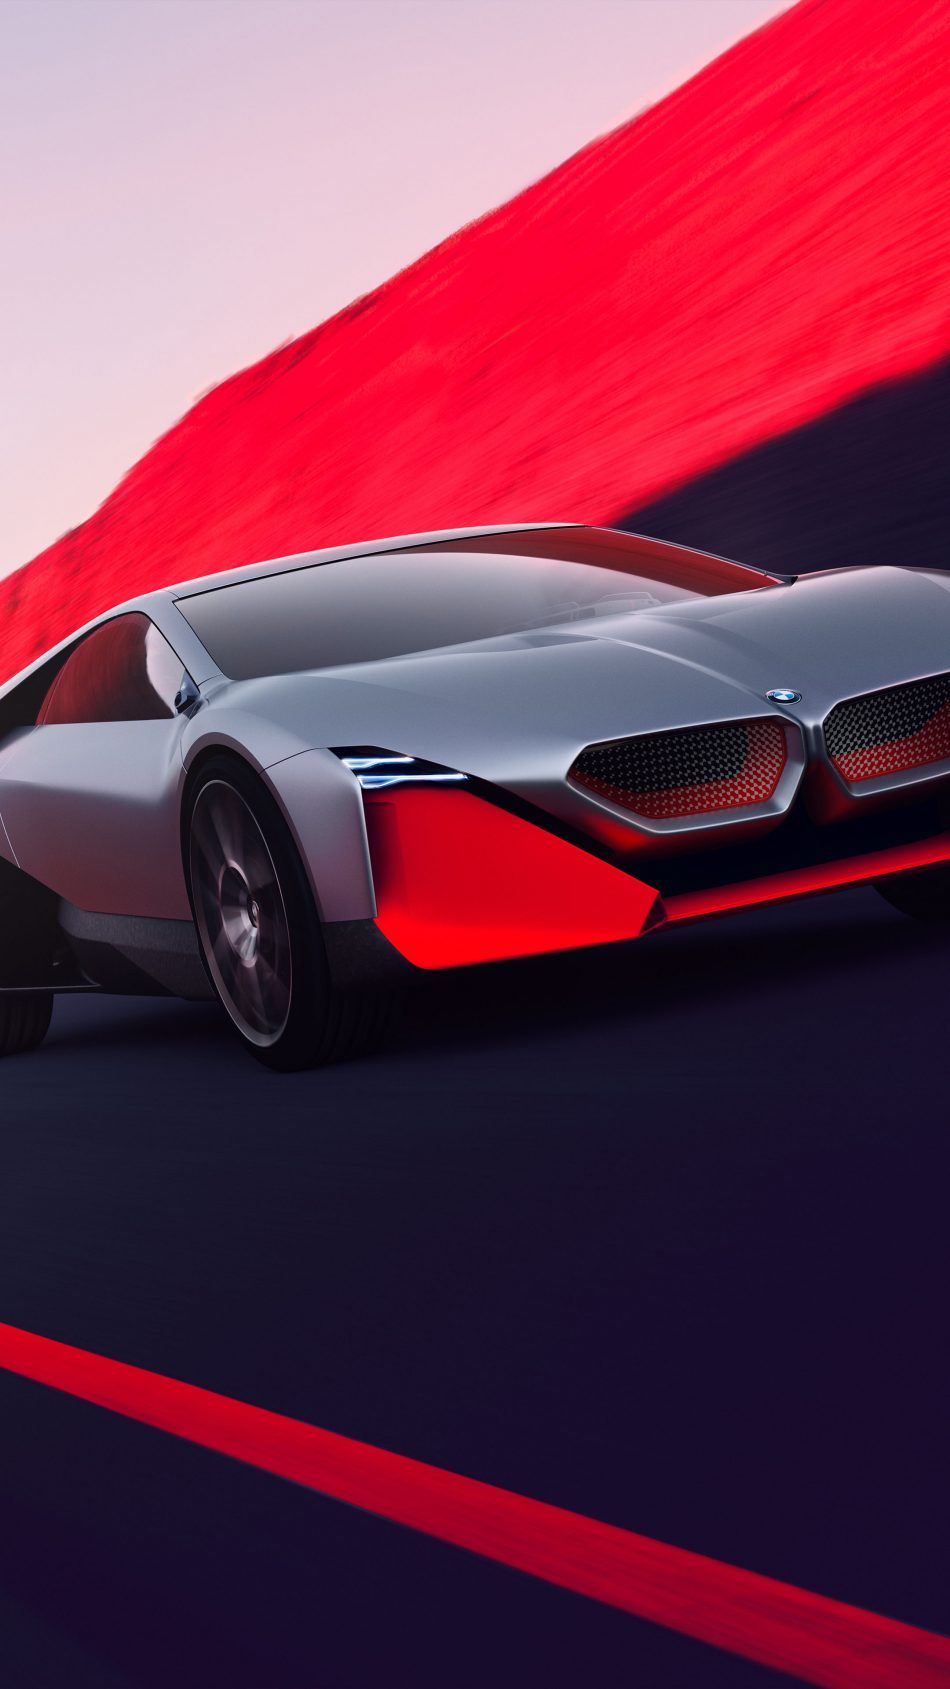 BMW Vision M Next Concept Car. Concept Cars, Sports Car Wallpaper, Hybrid Sports Car